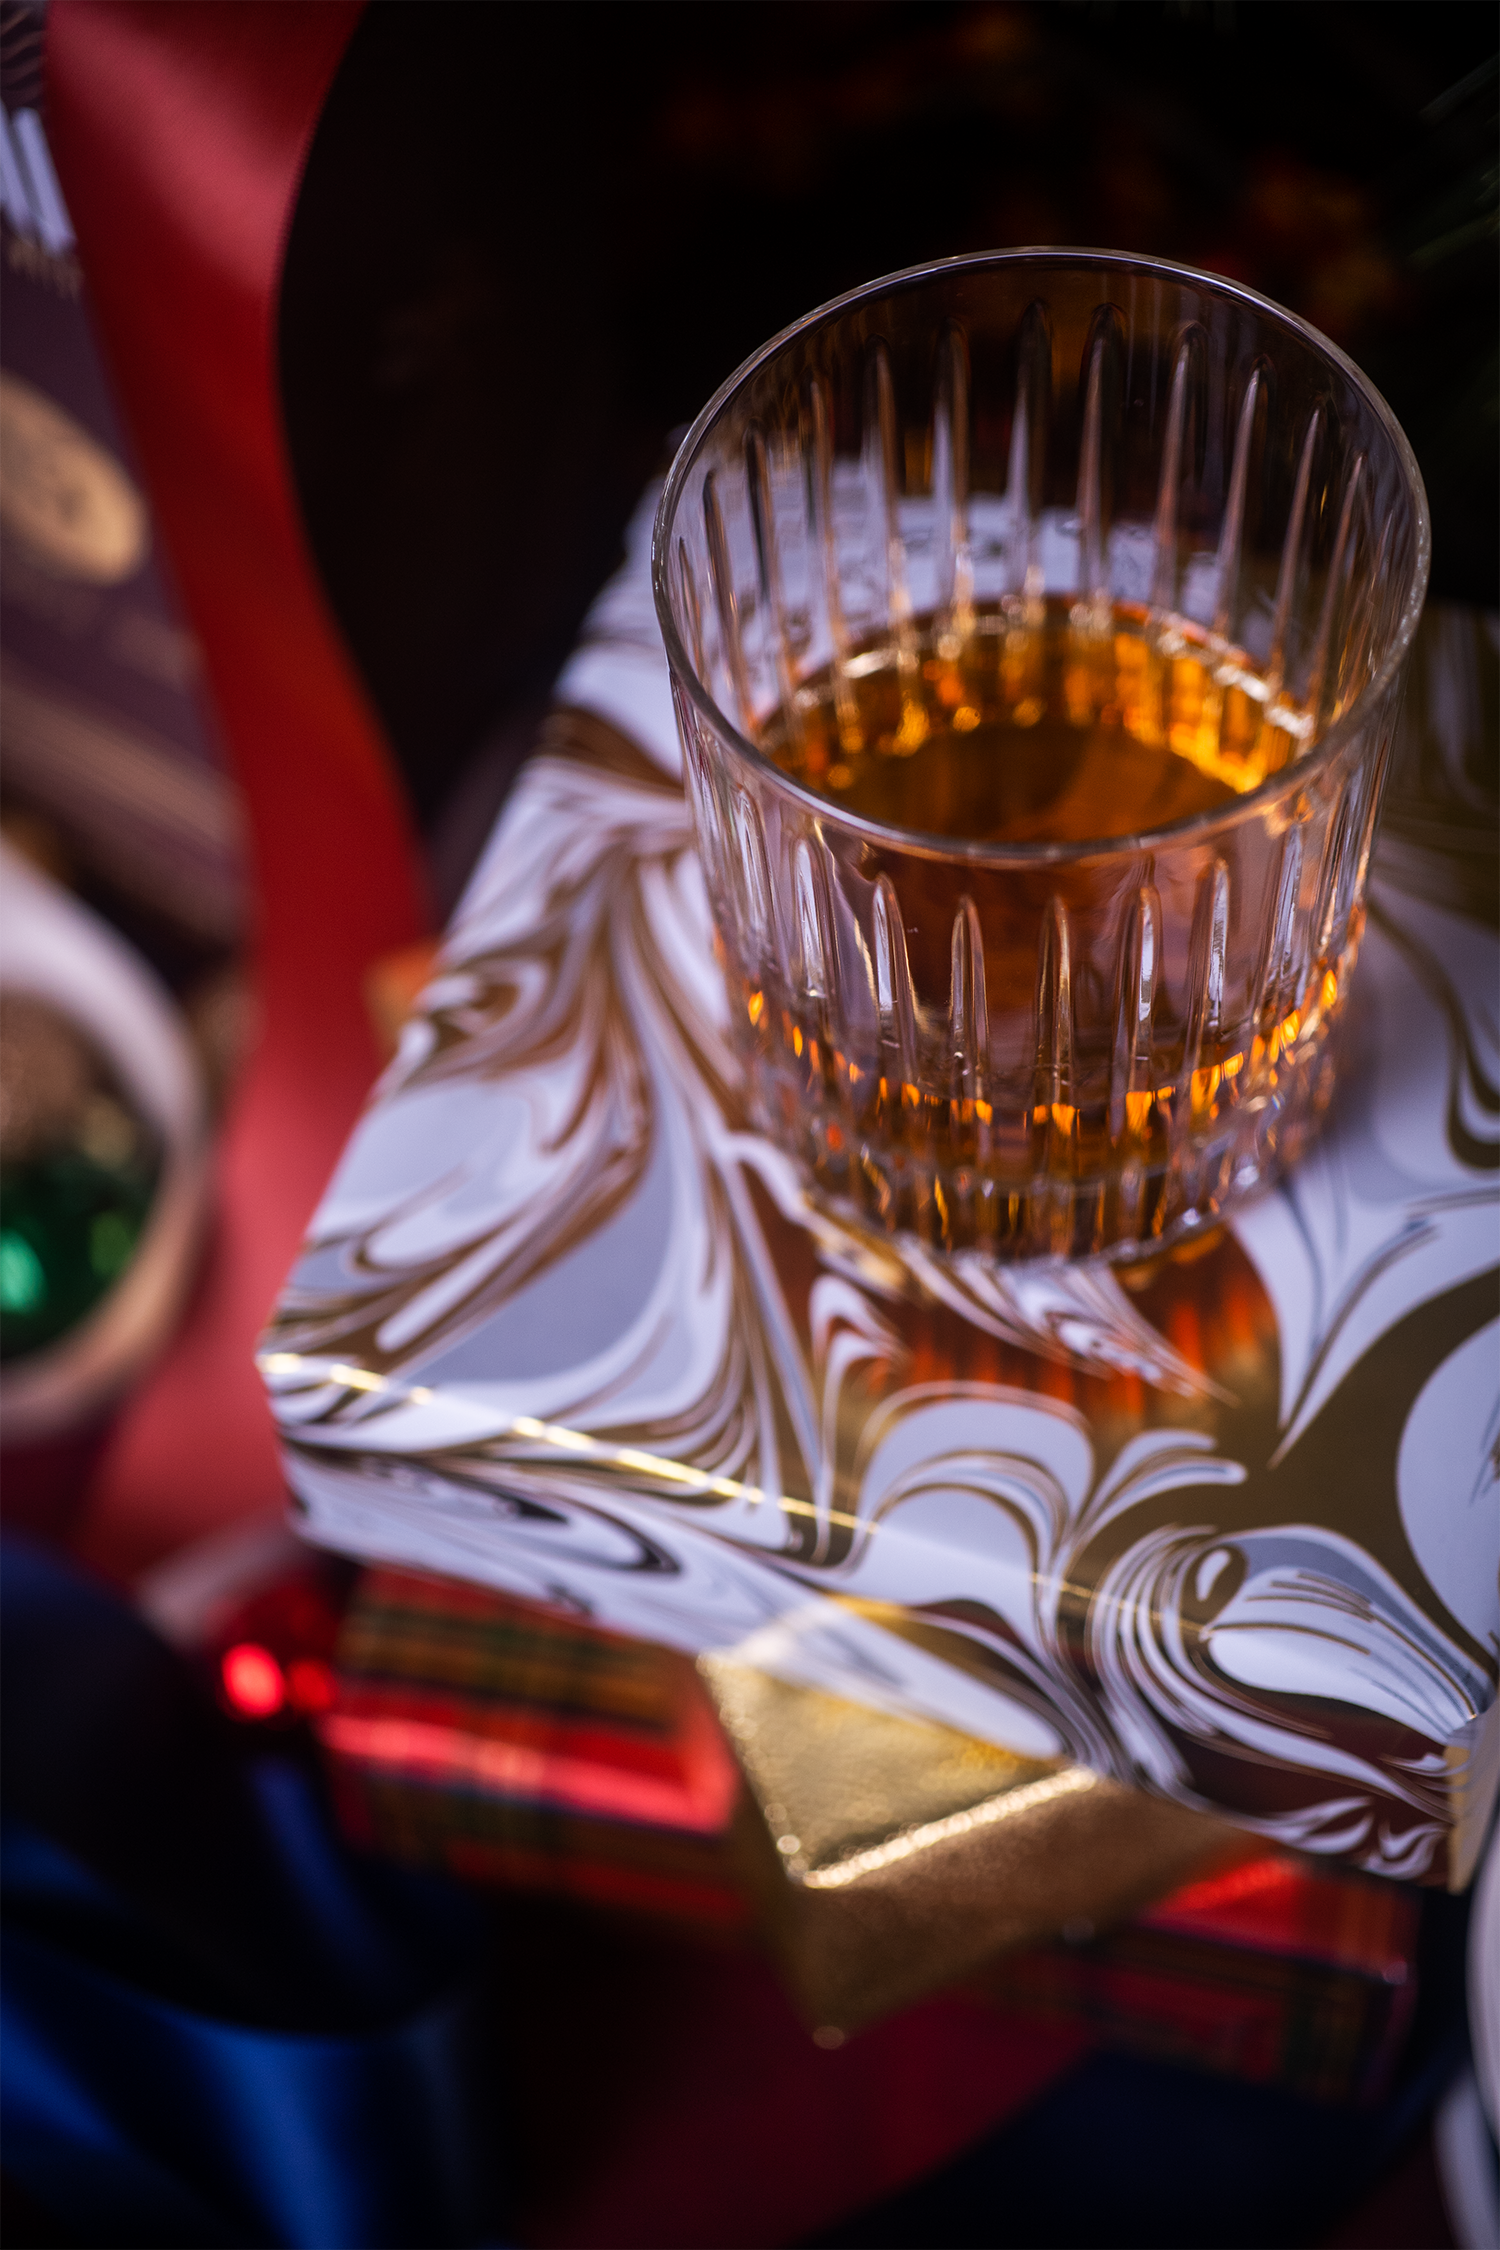 Shibui holiday 2022 whisky glass ribbons 3b.png